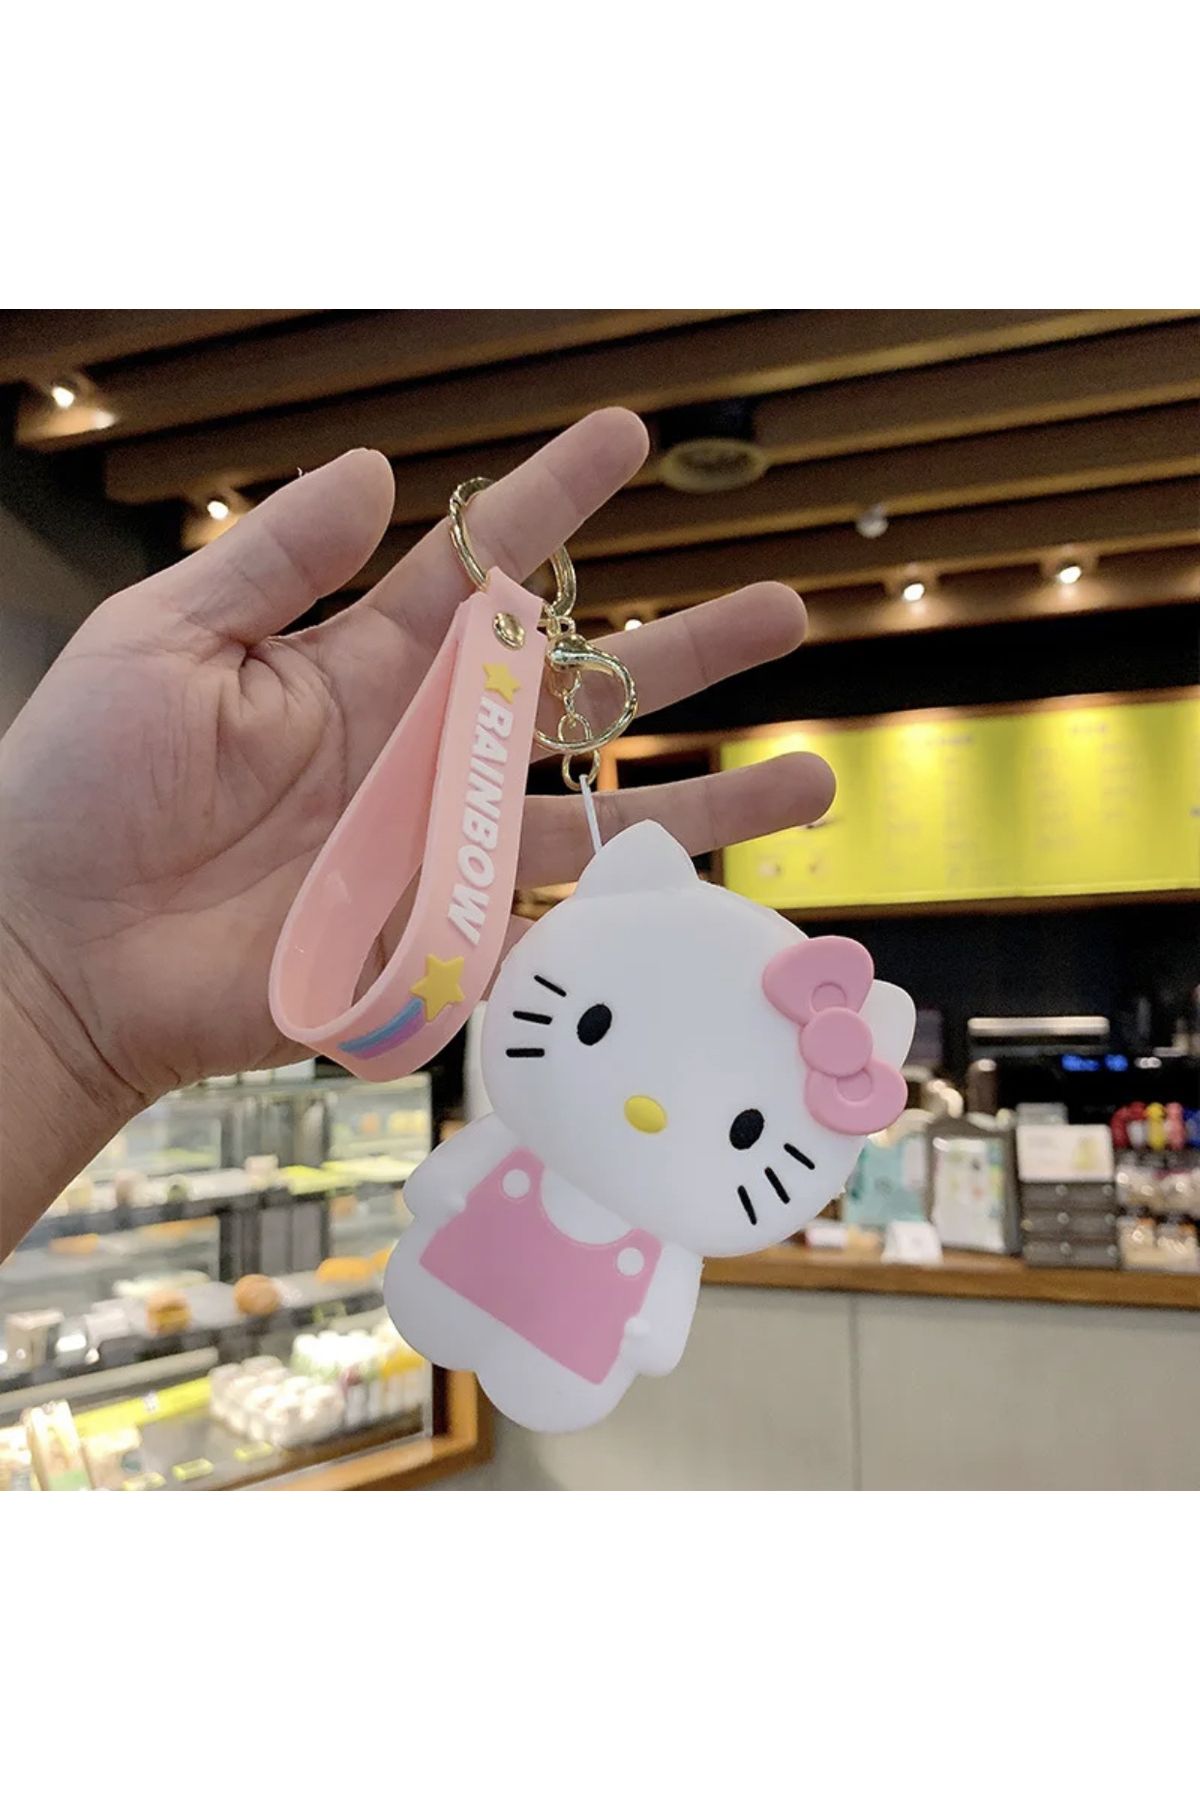 synshop Sanrio Hello Kitty Kawai Kore Japon anime Bozuk Para Cüzdanı Anahtarlık Çanta Süsü Kulaklık Kılıfı